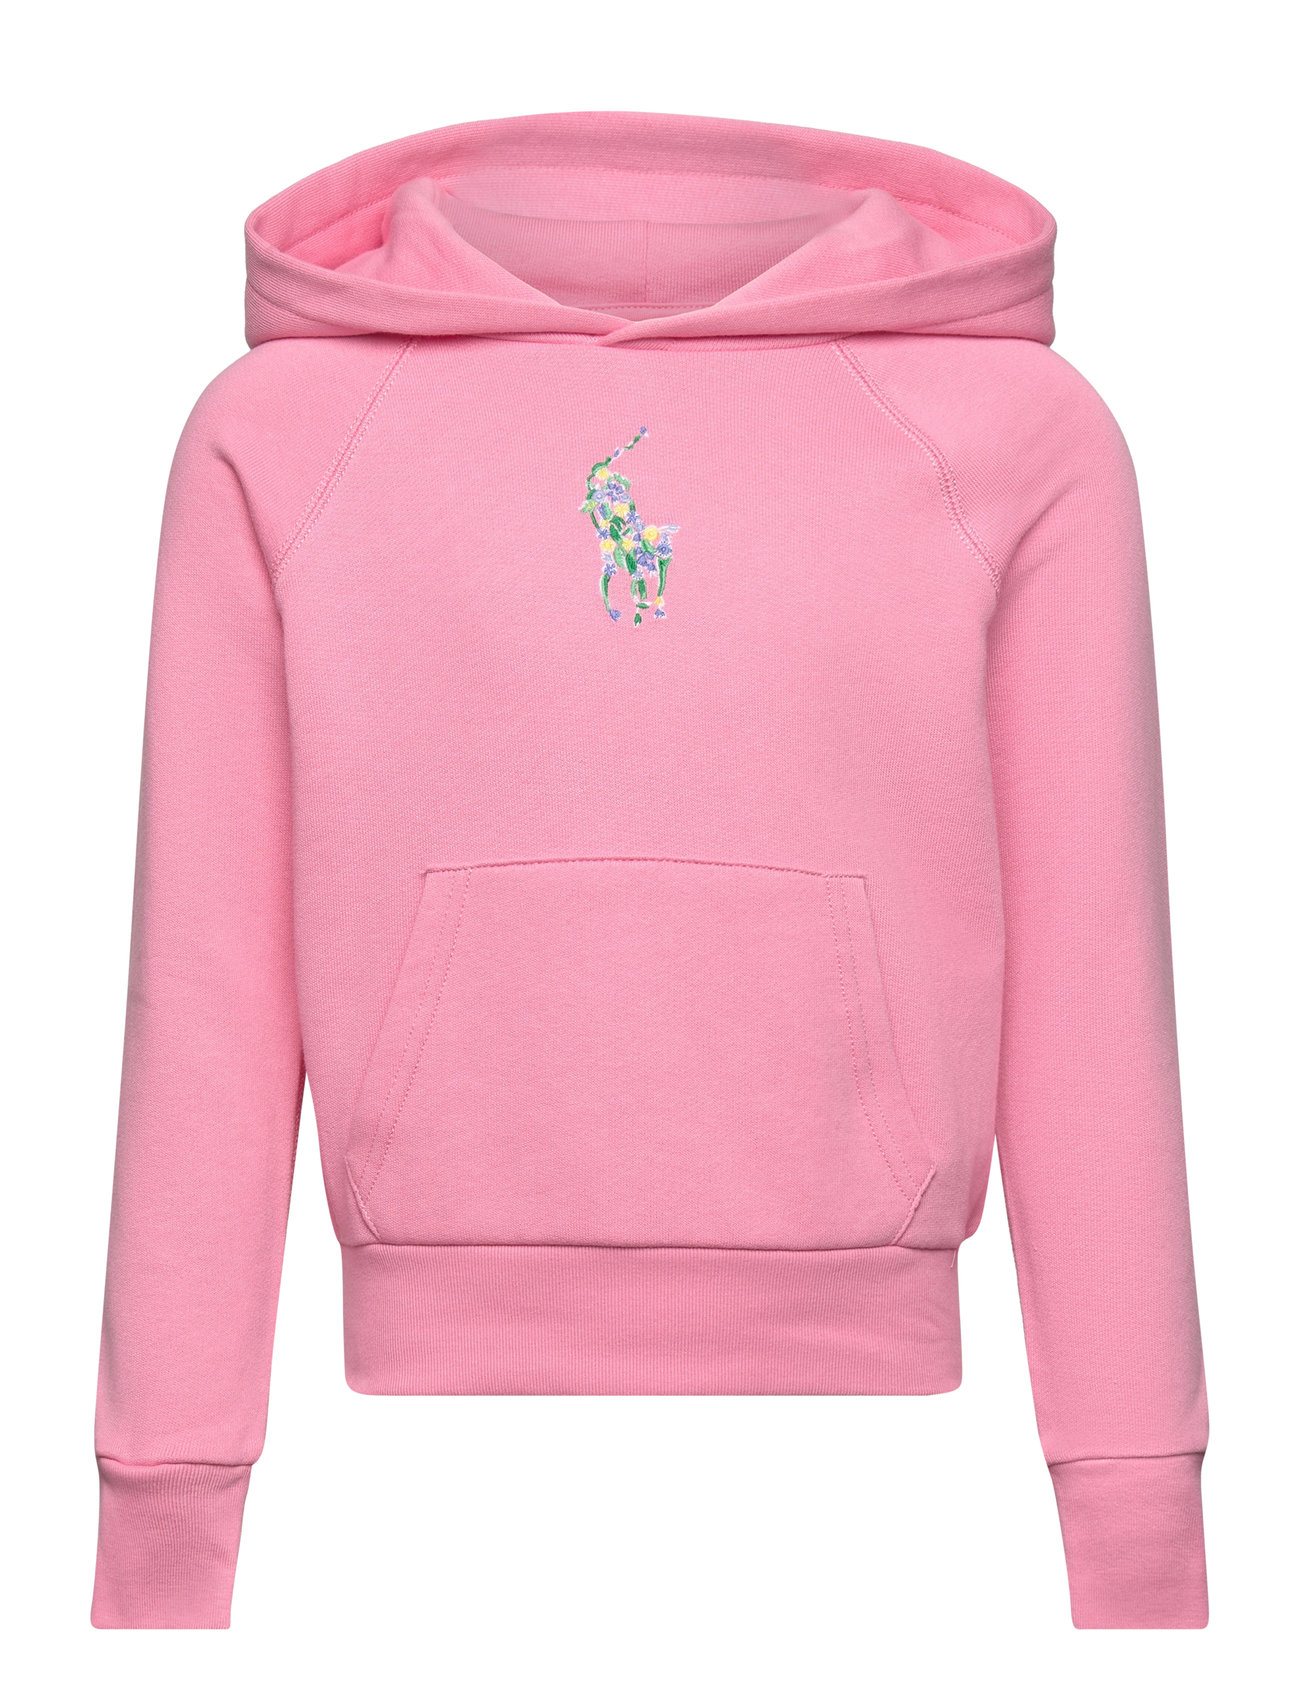 Floral Big Pony Terry Hoodie Tops Sweat-shirts & Hoodies Hoodies Pink Ralph Lauren Kids